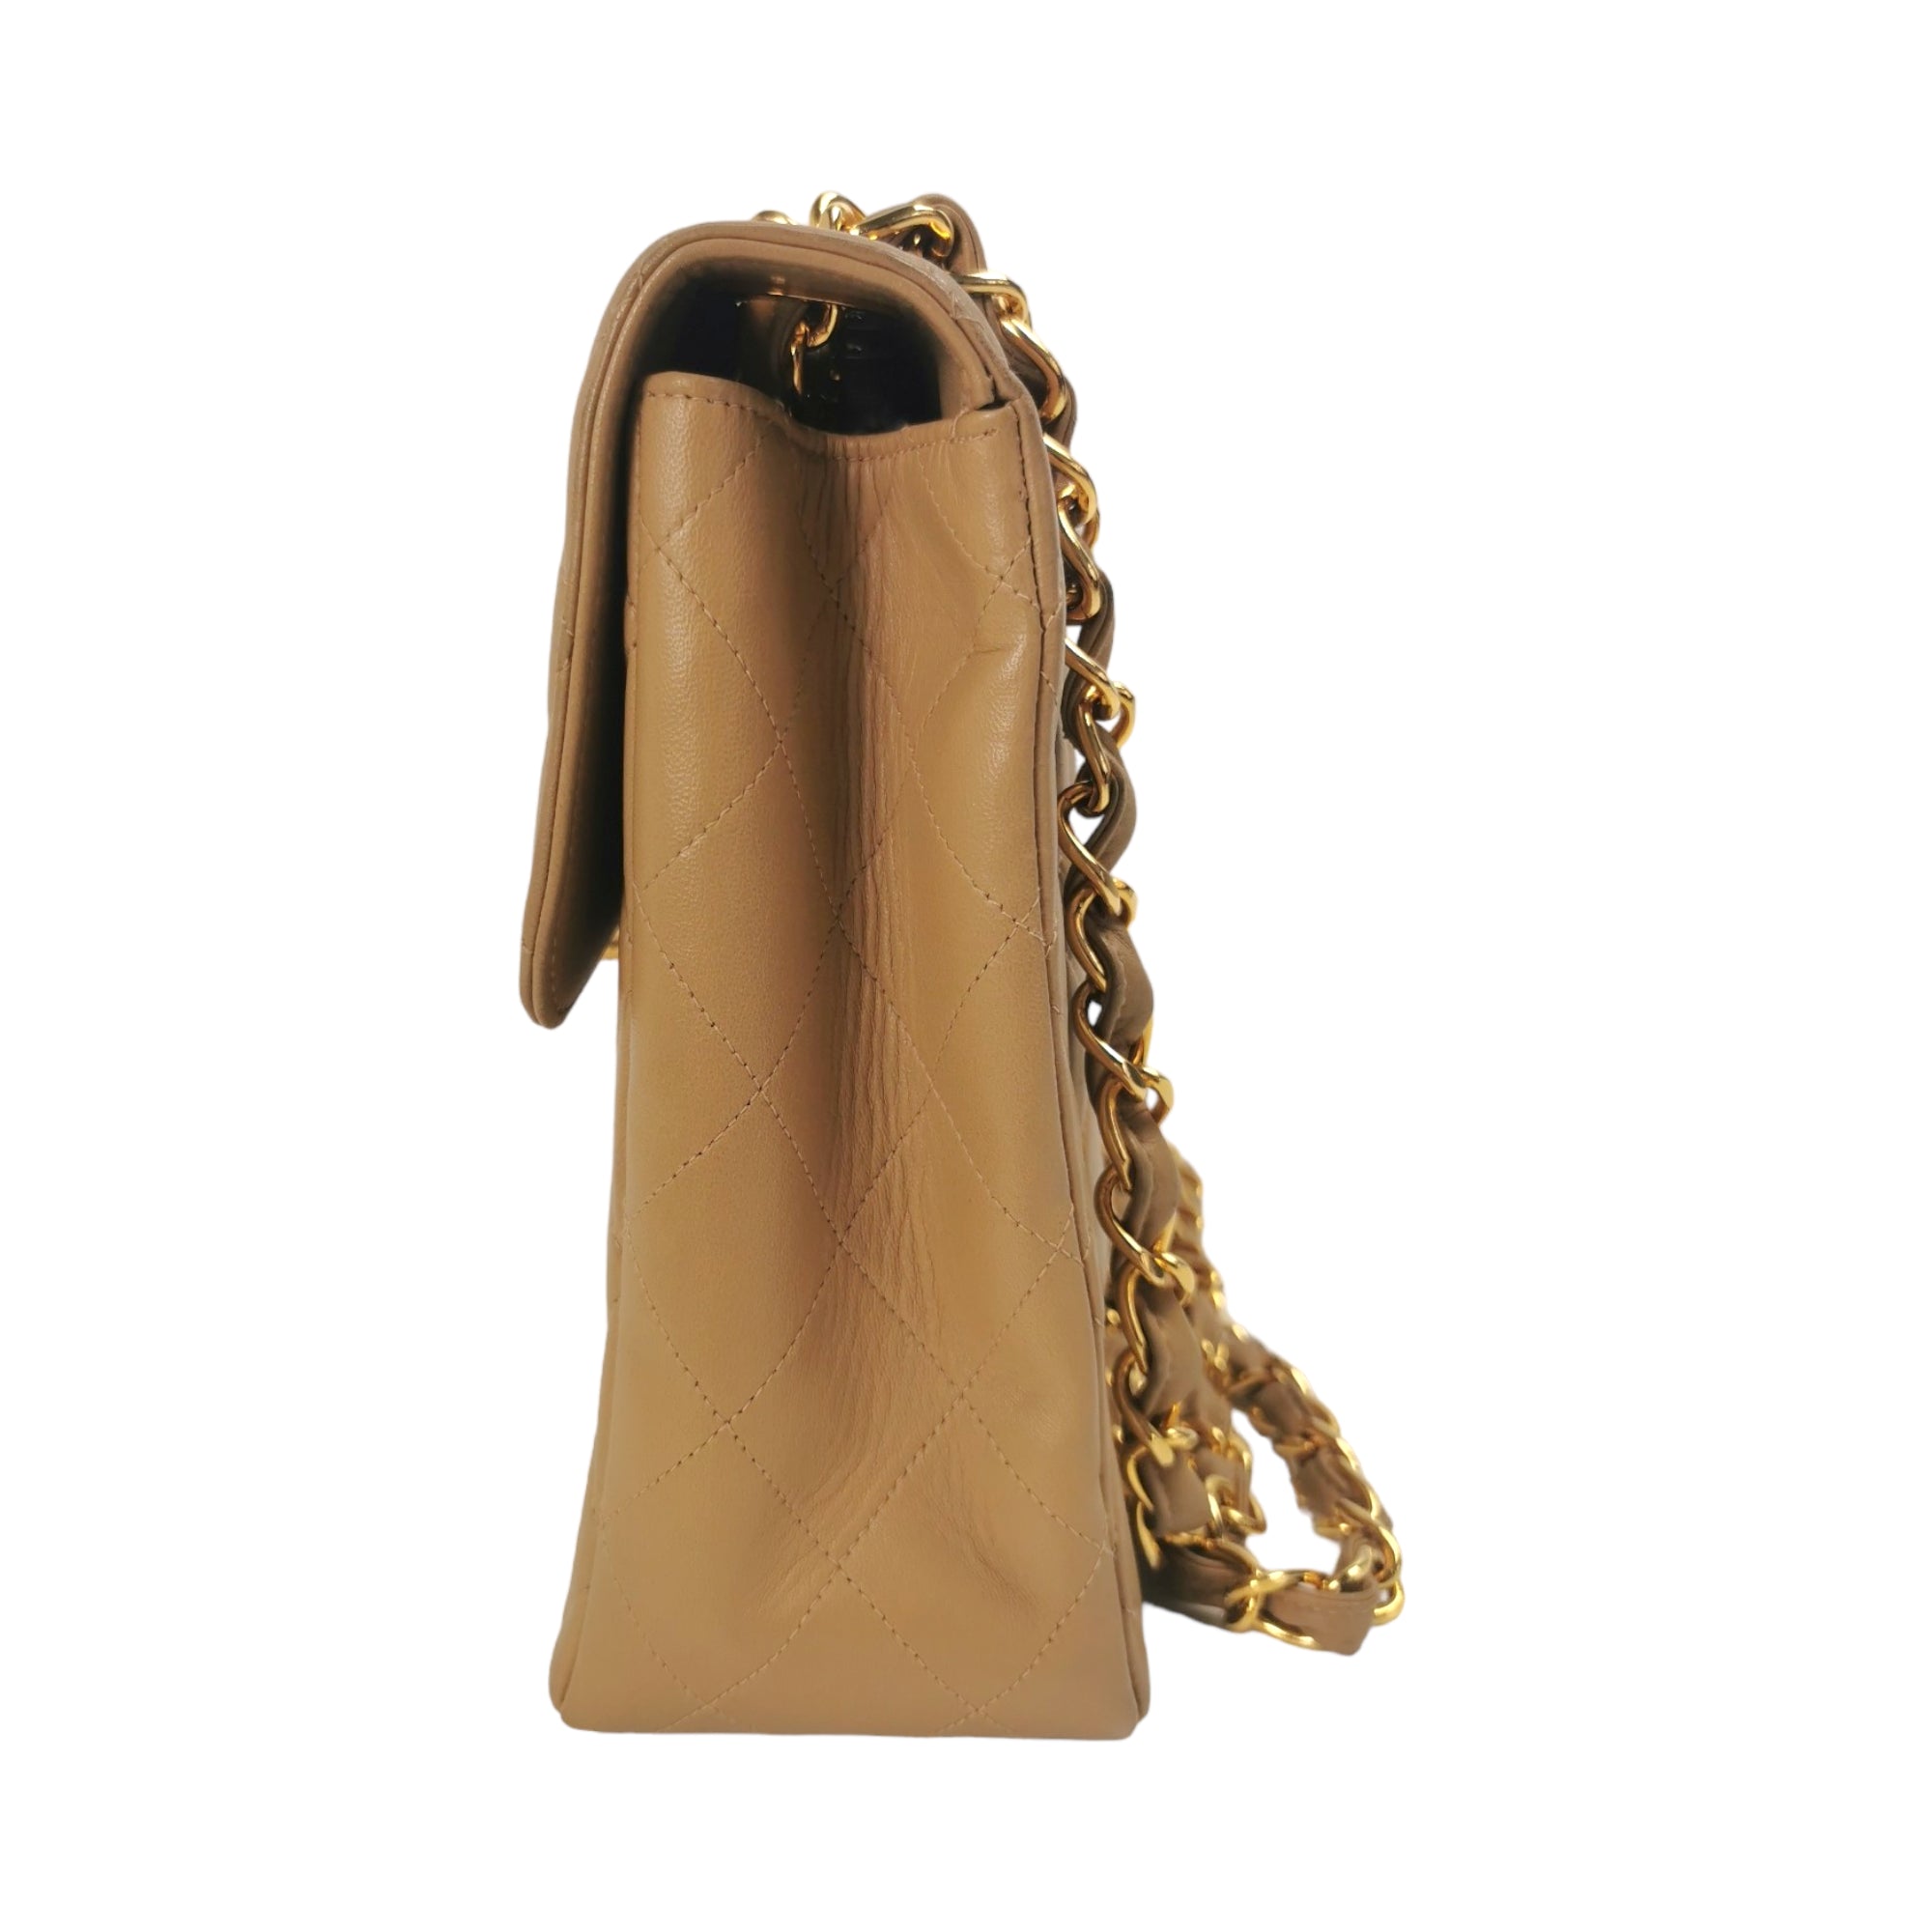 CHANEL Jumbo Gold Chain Beige Lambskin Shopper Tote Bag item #39126